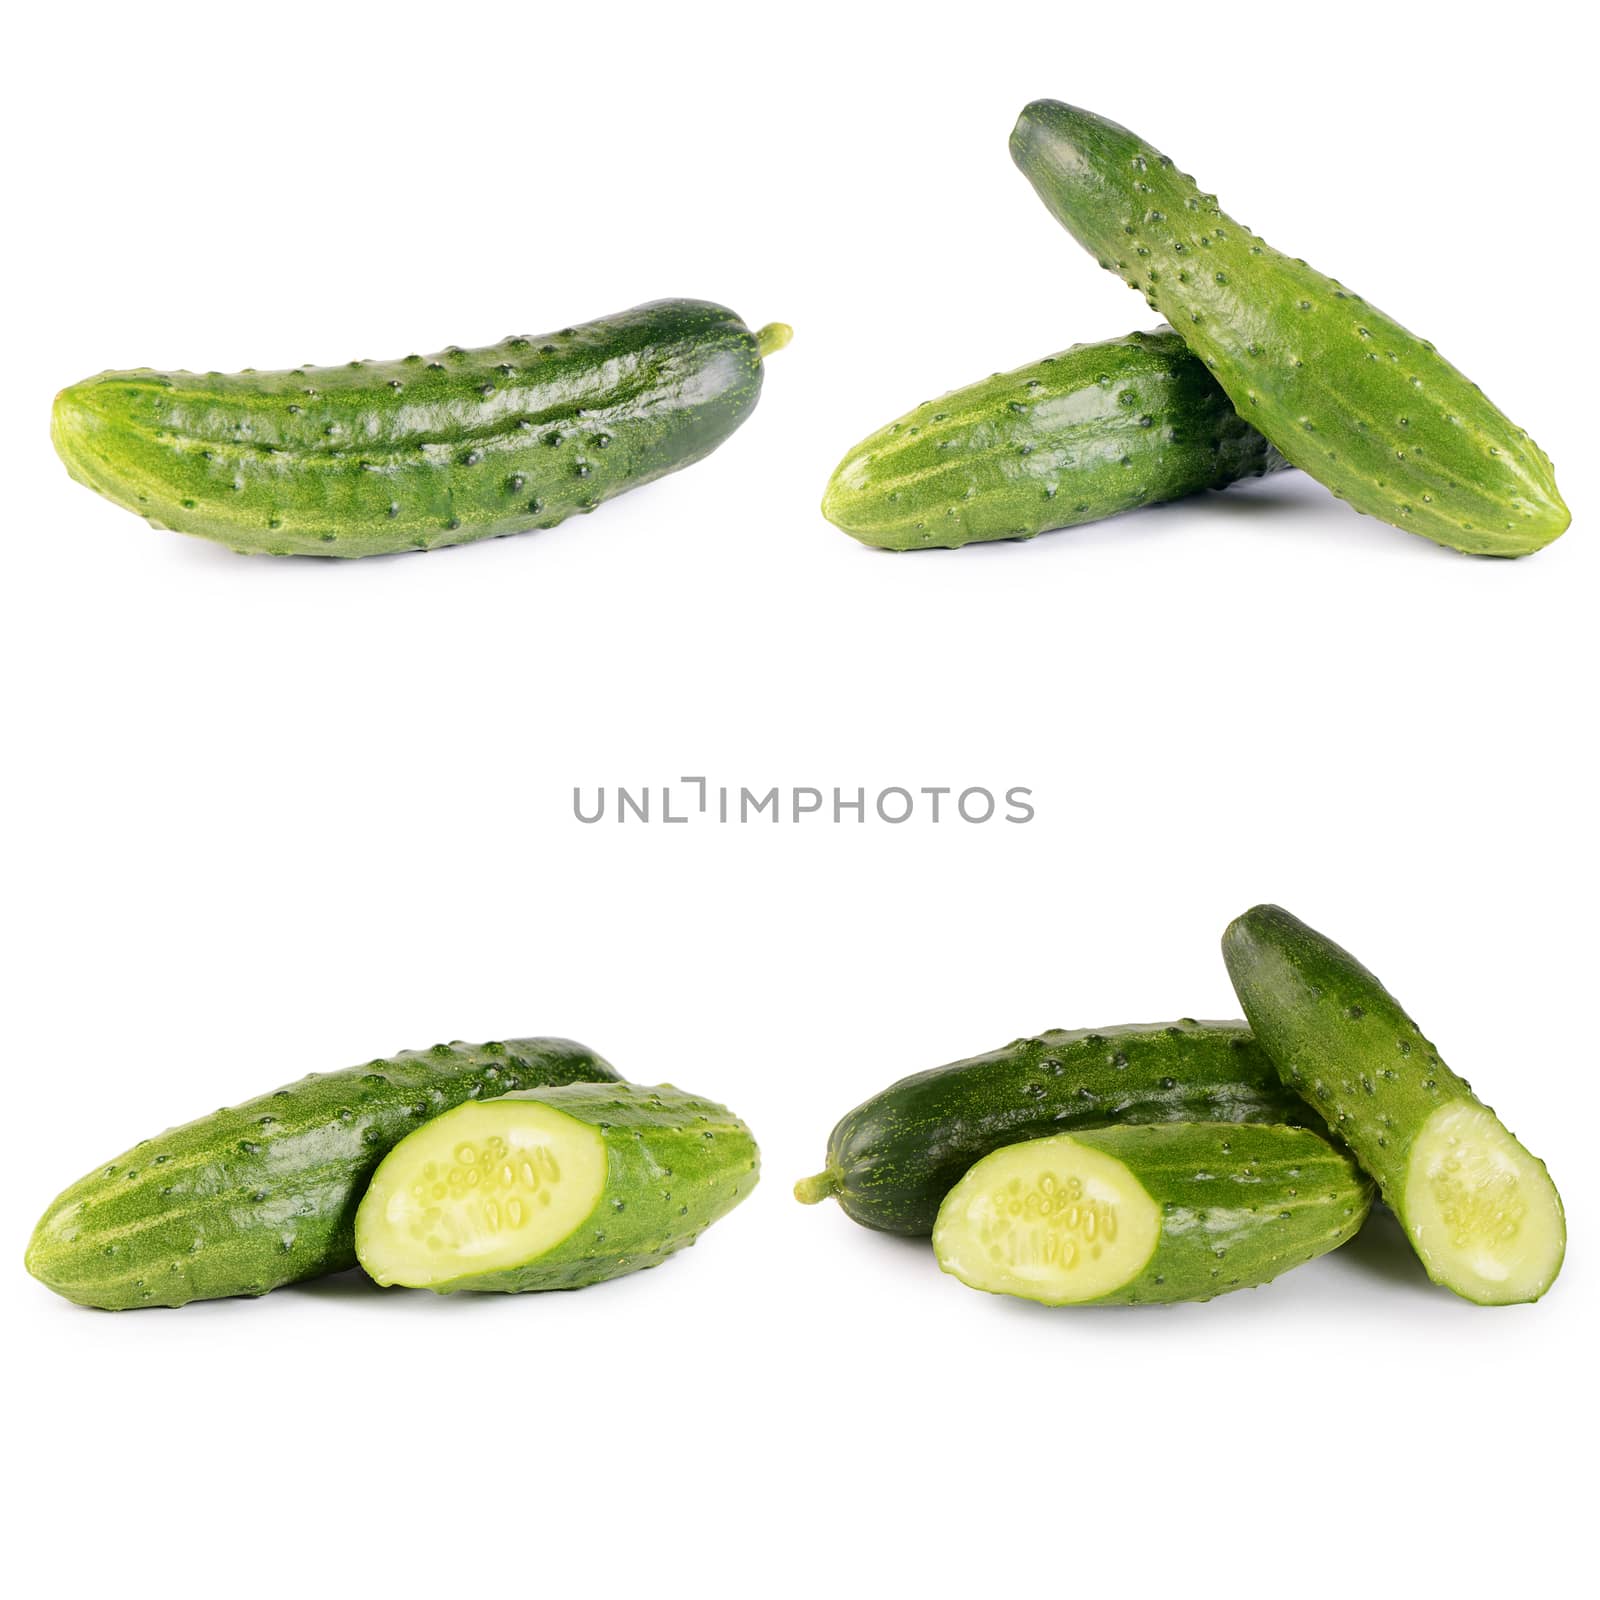 The fresh cucumber isolated on white background